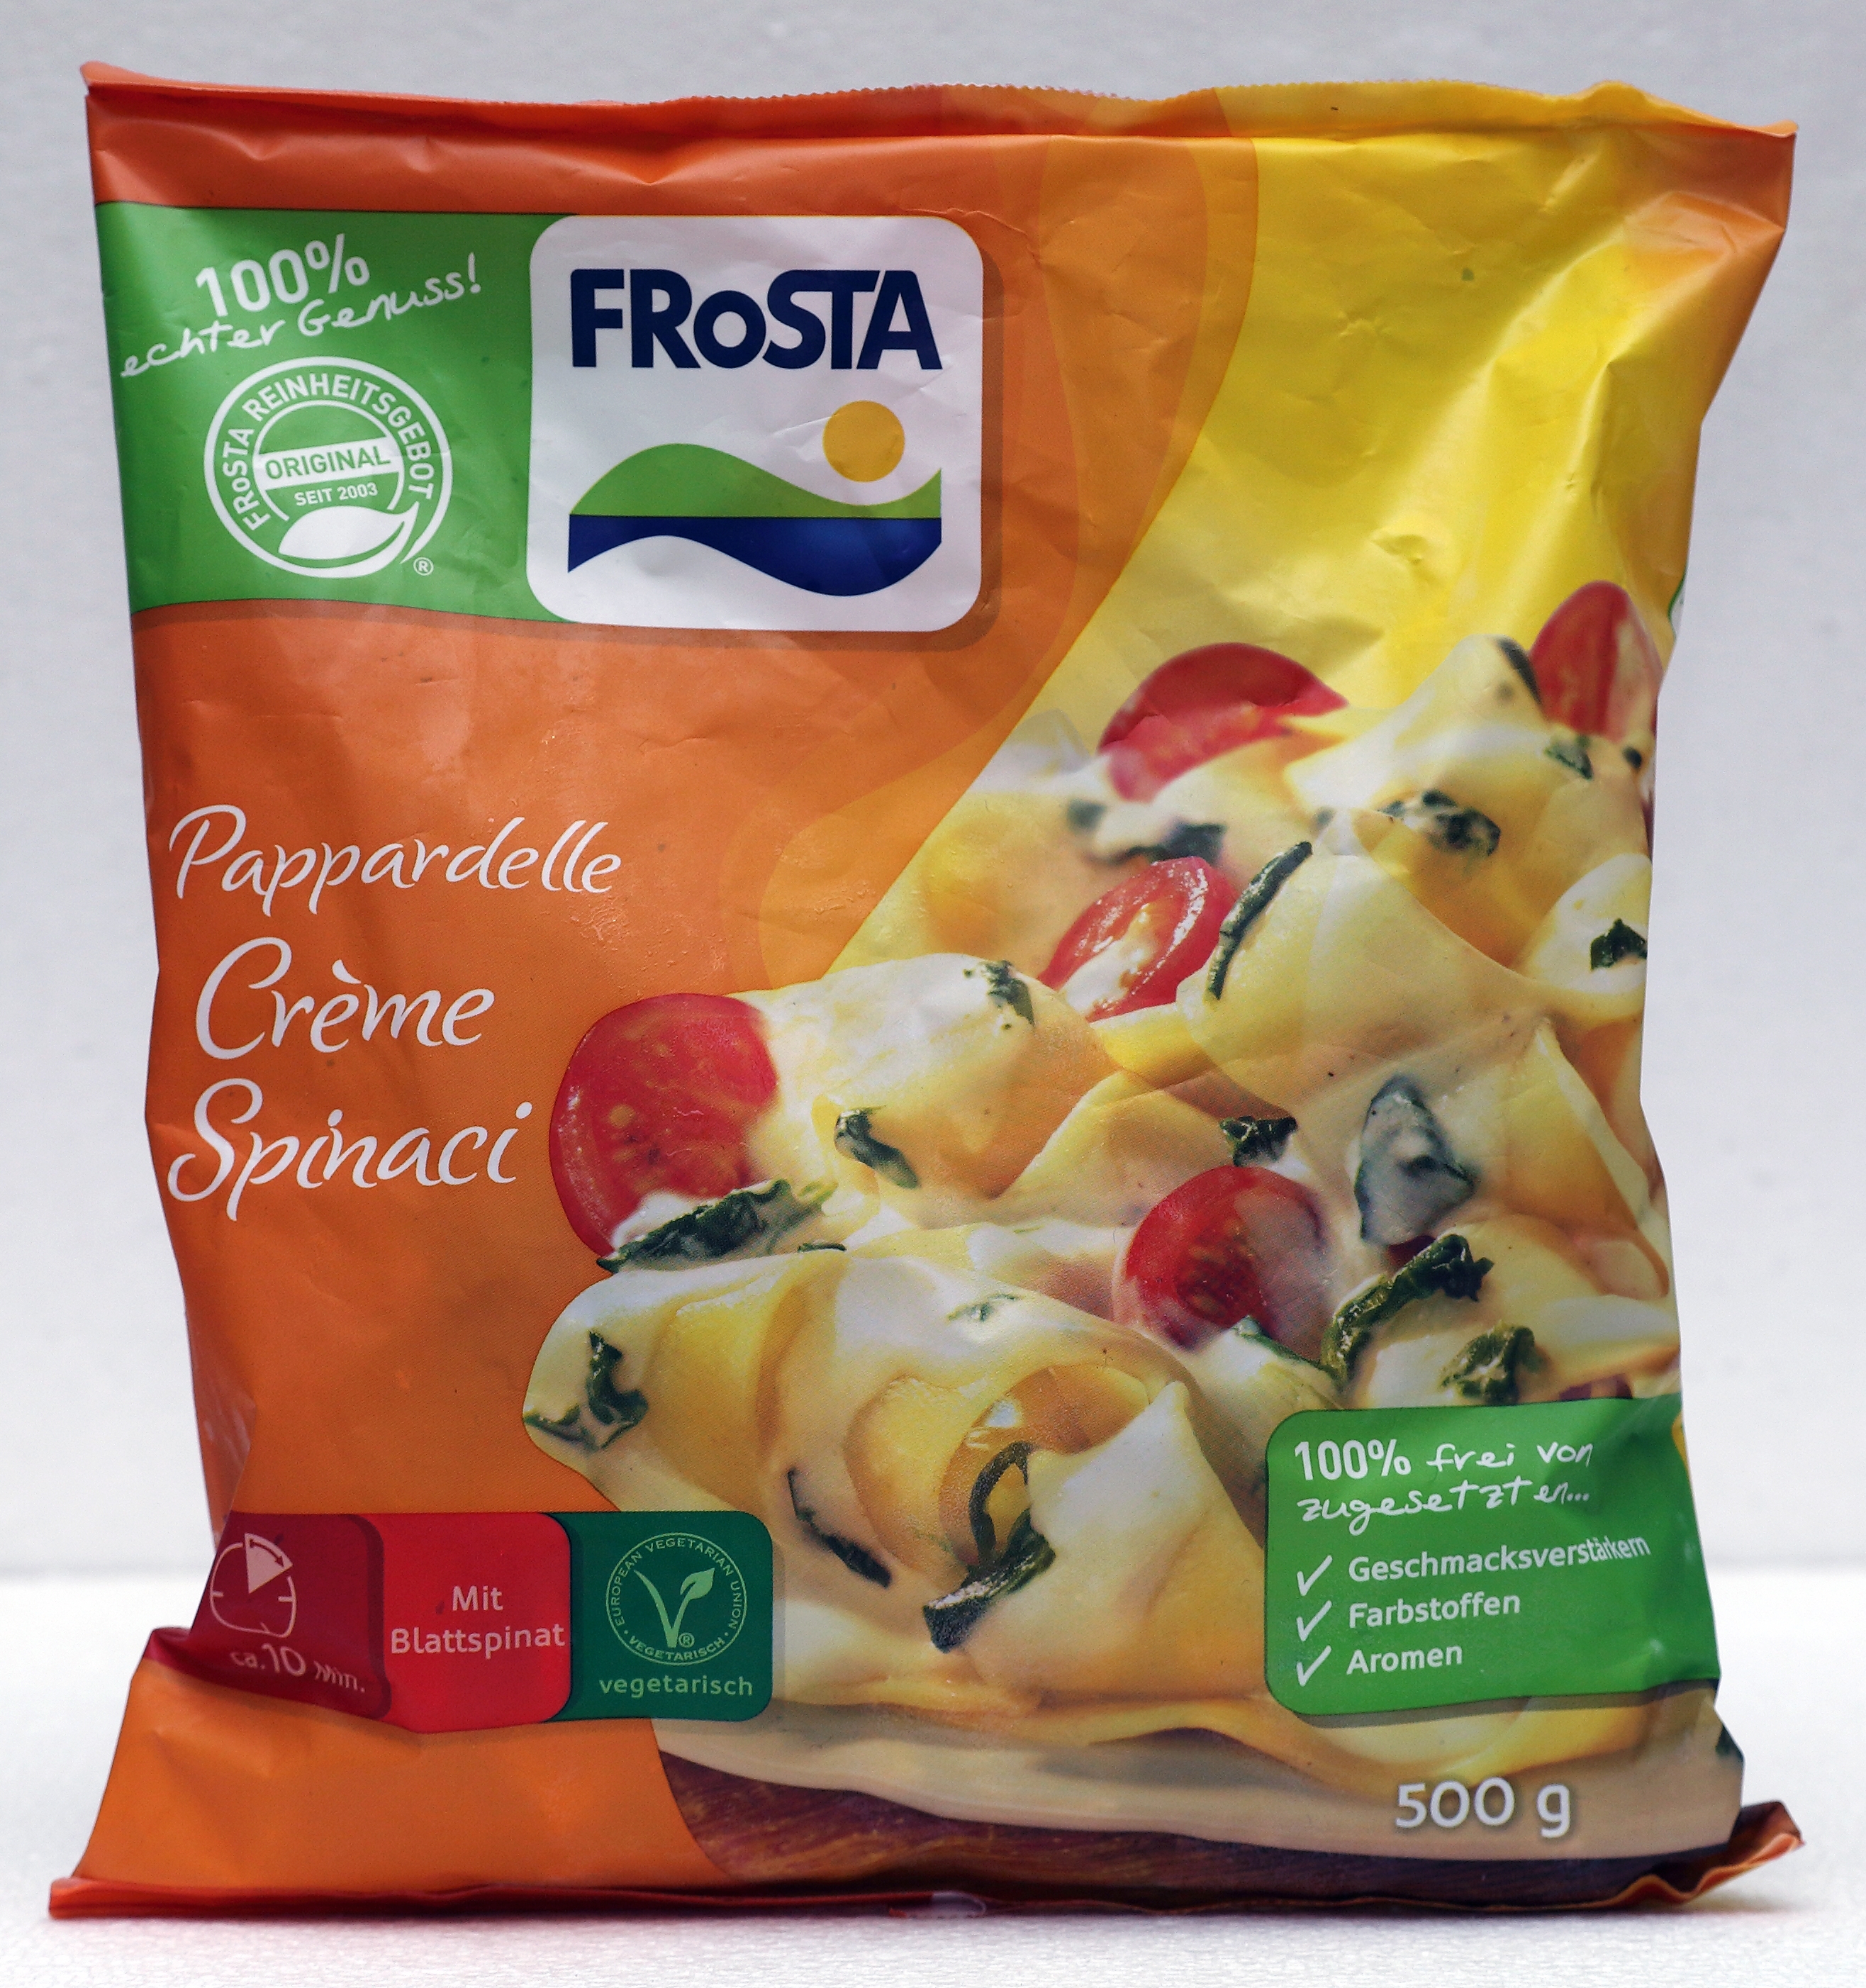 frosta-pappardelle-creme-spinaci-packung-aussehen-werbung-verpackung